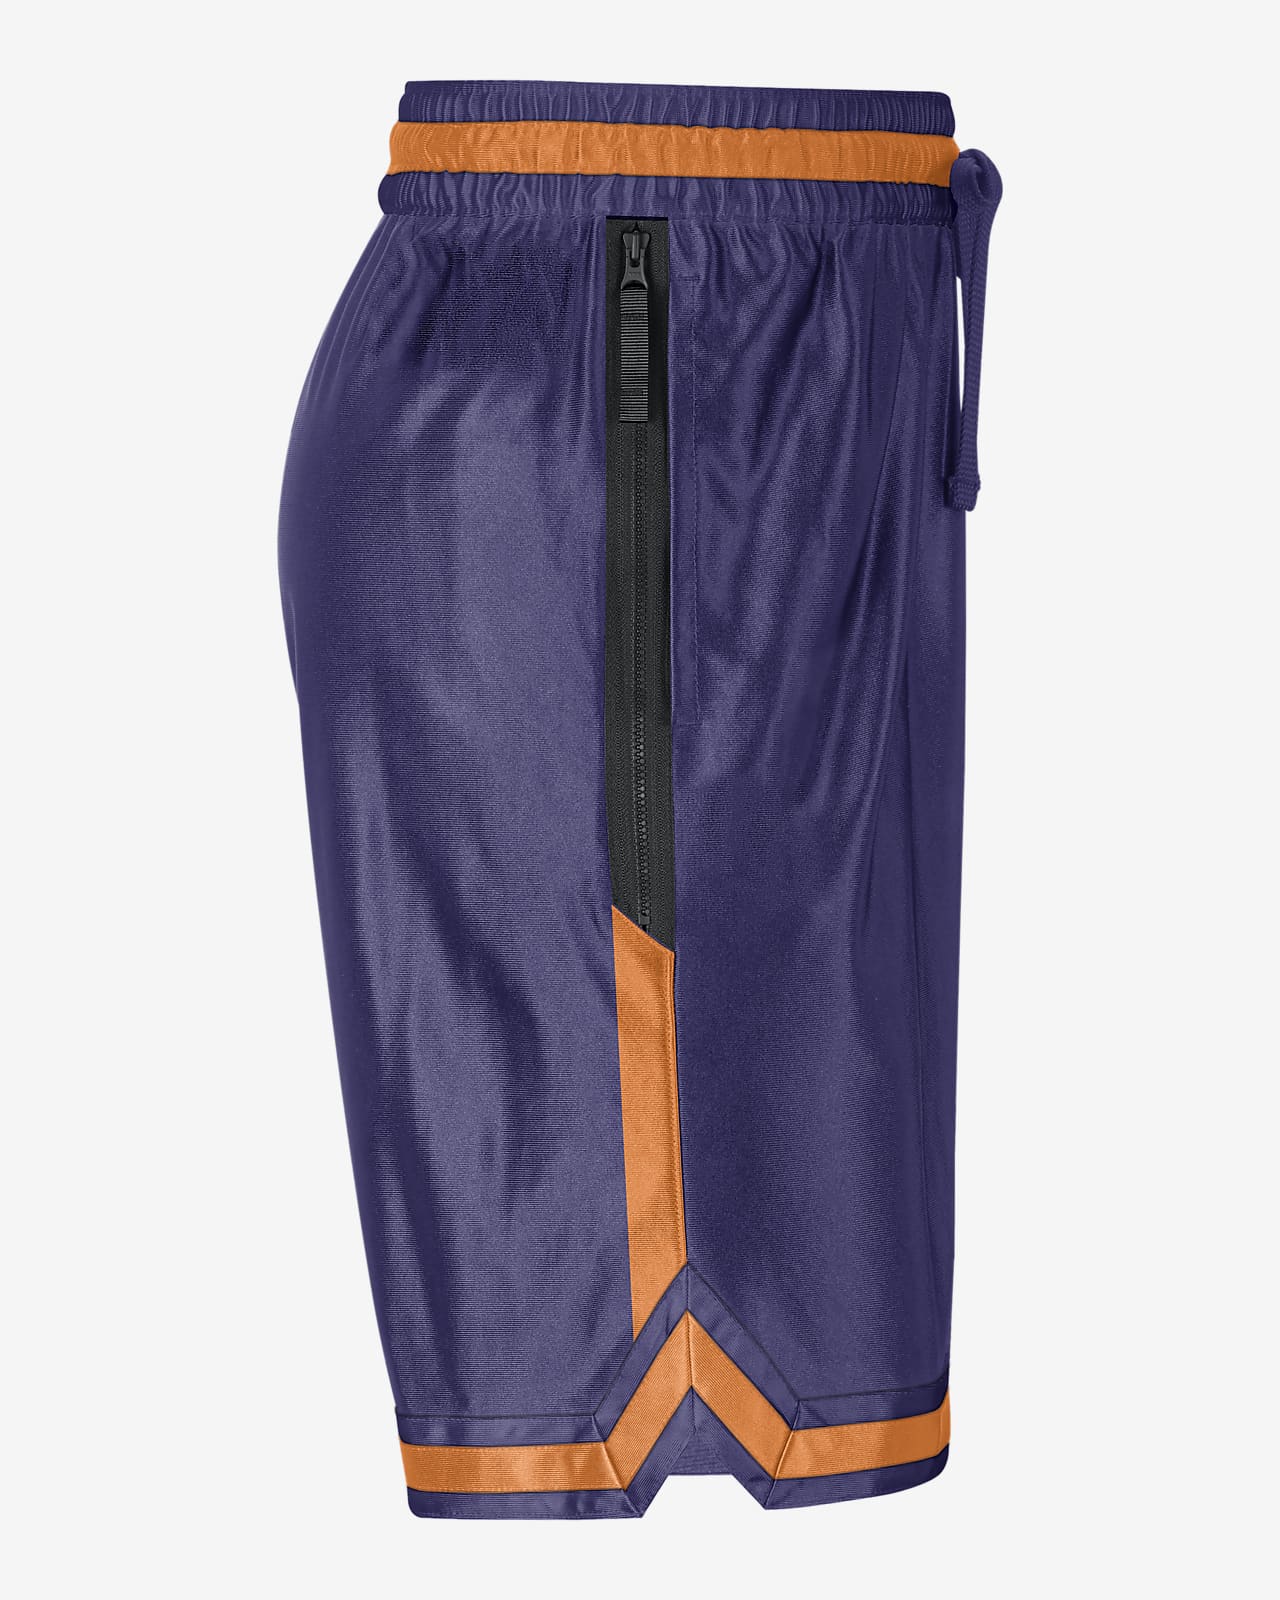 Phoenix Suns Nike Icon Swingman Shorts - Mens